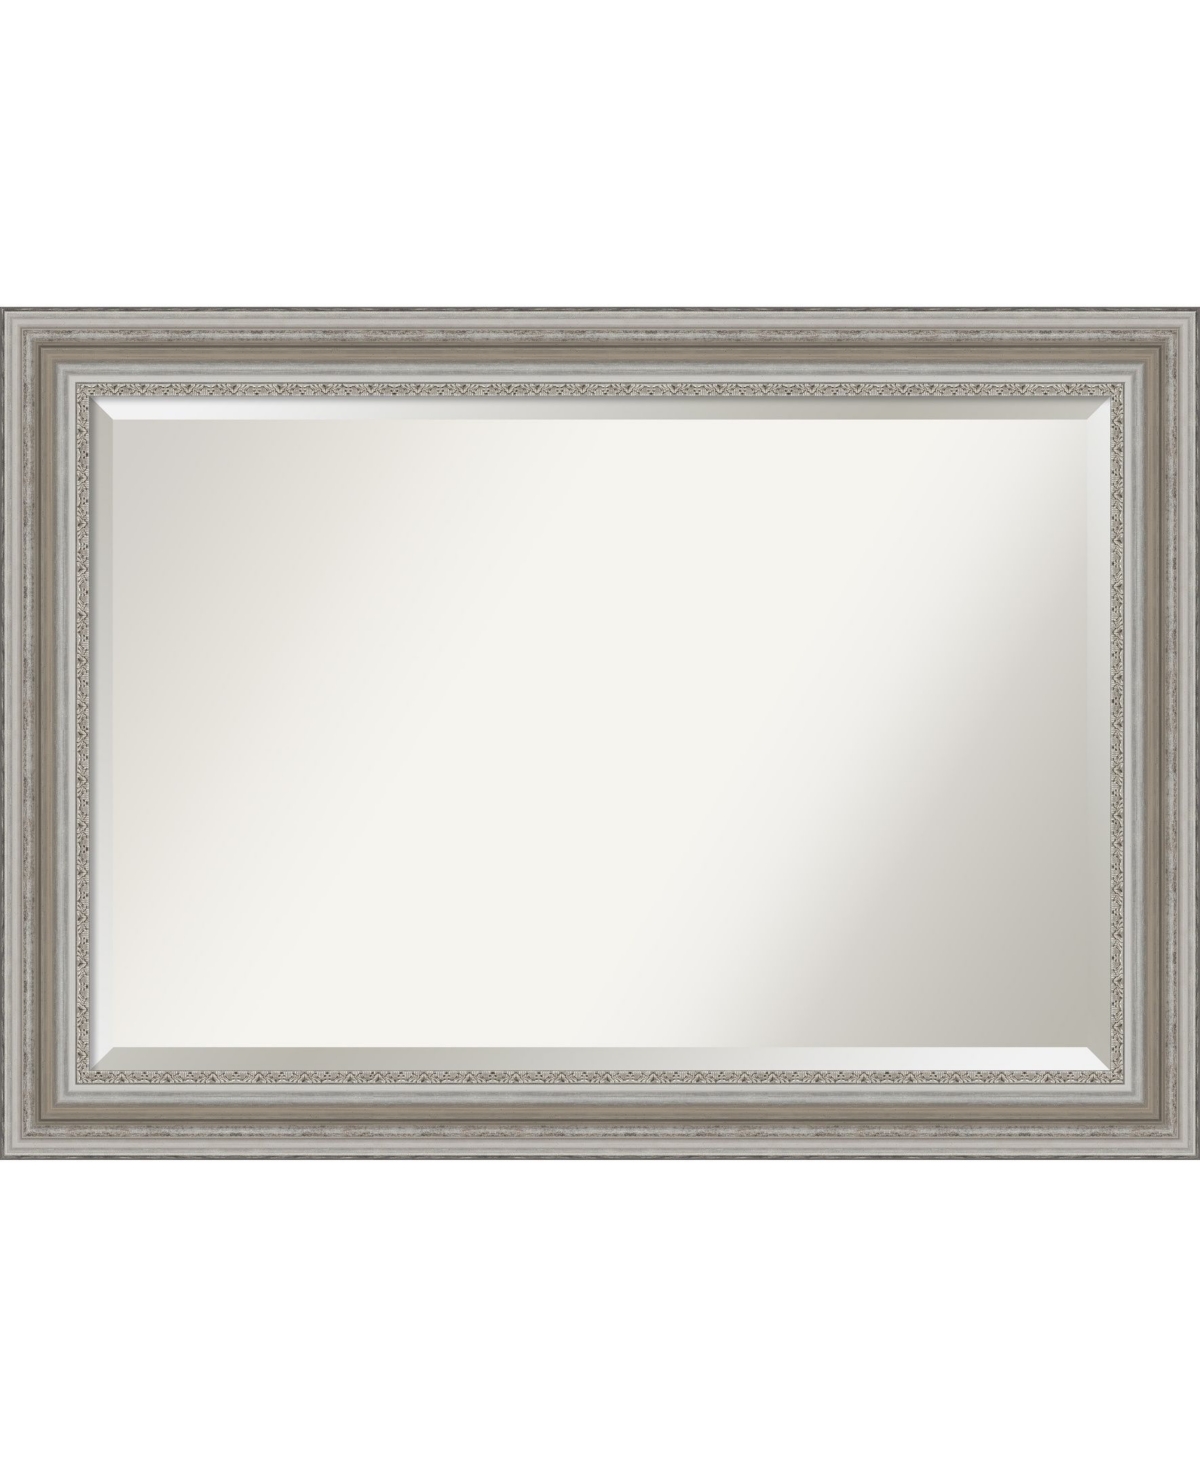 Parlor Silver-tone Framed Bathroom Vanity Wall Mirror, 41.5" x 29.50" - Silver